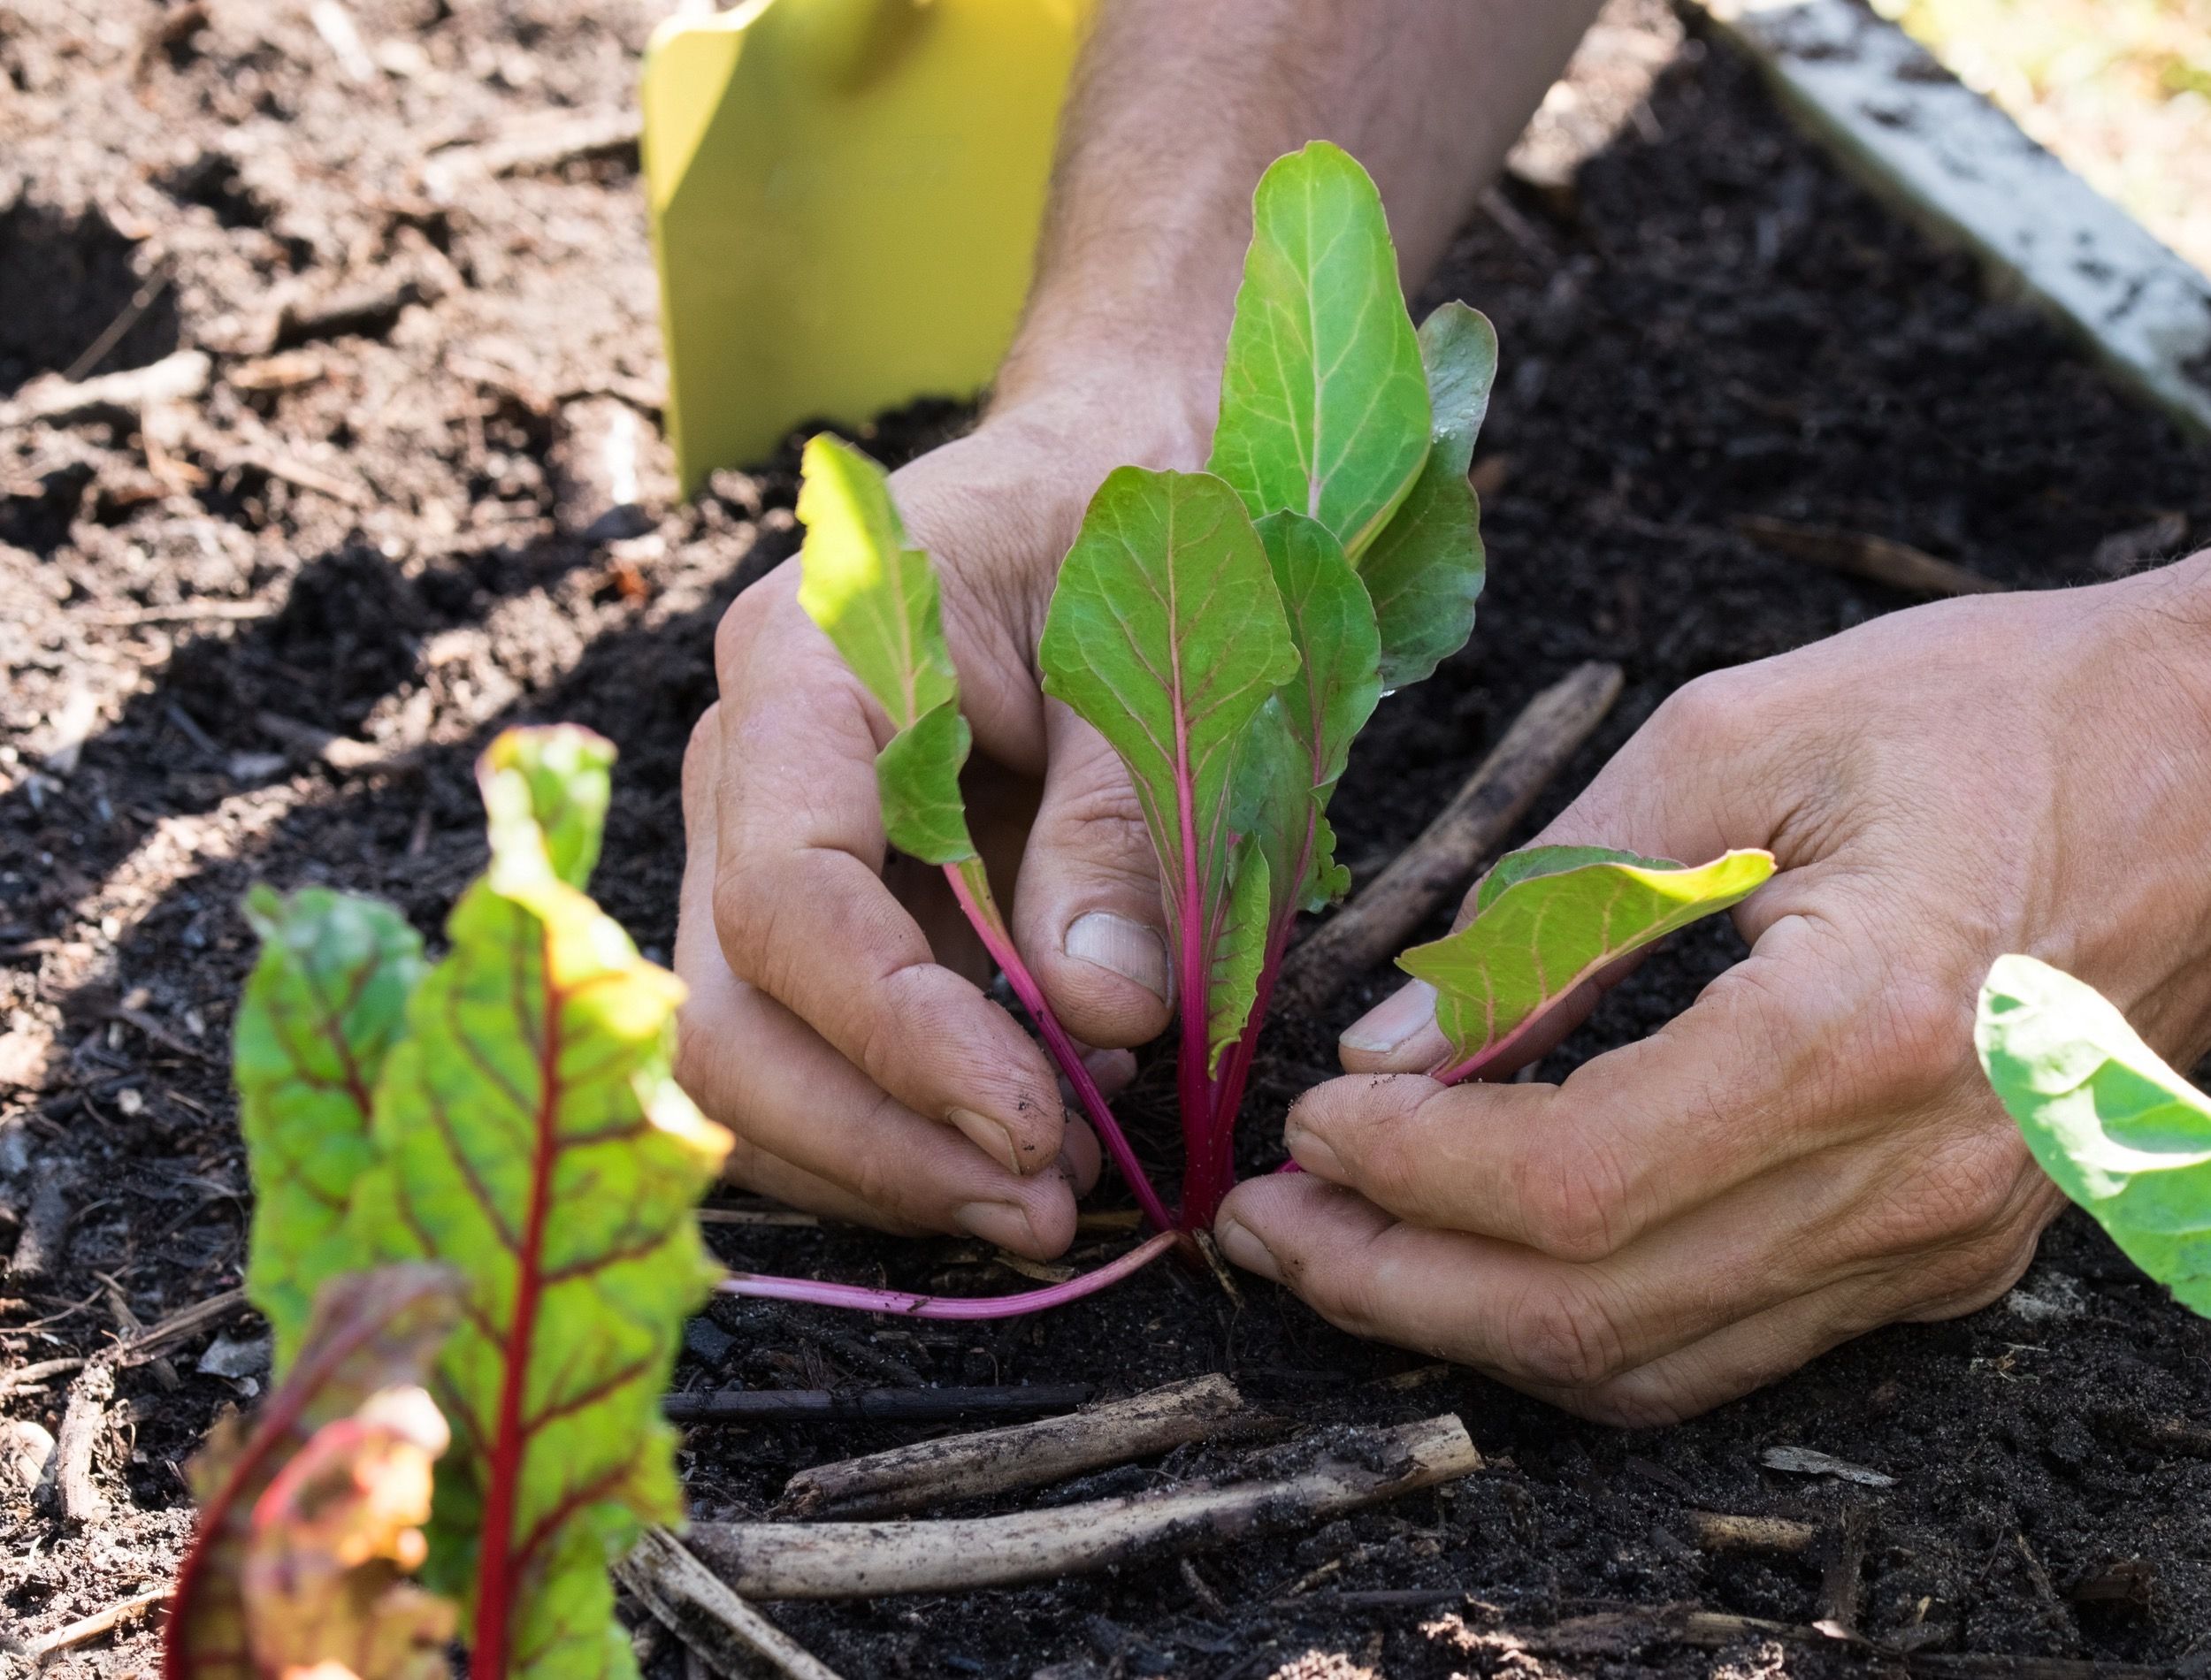 Hands planting lettuce